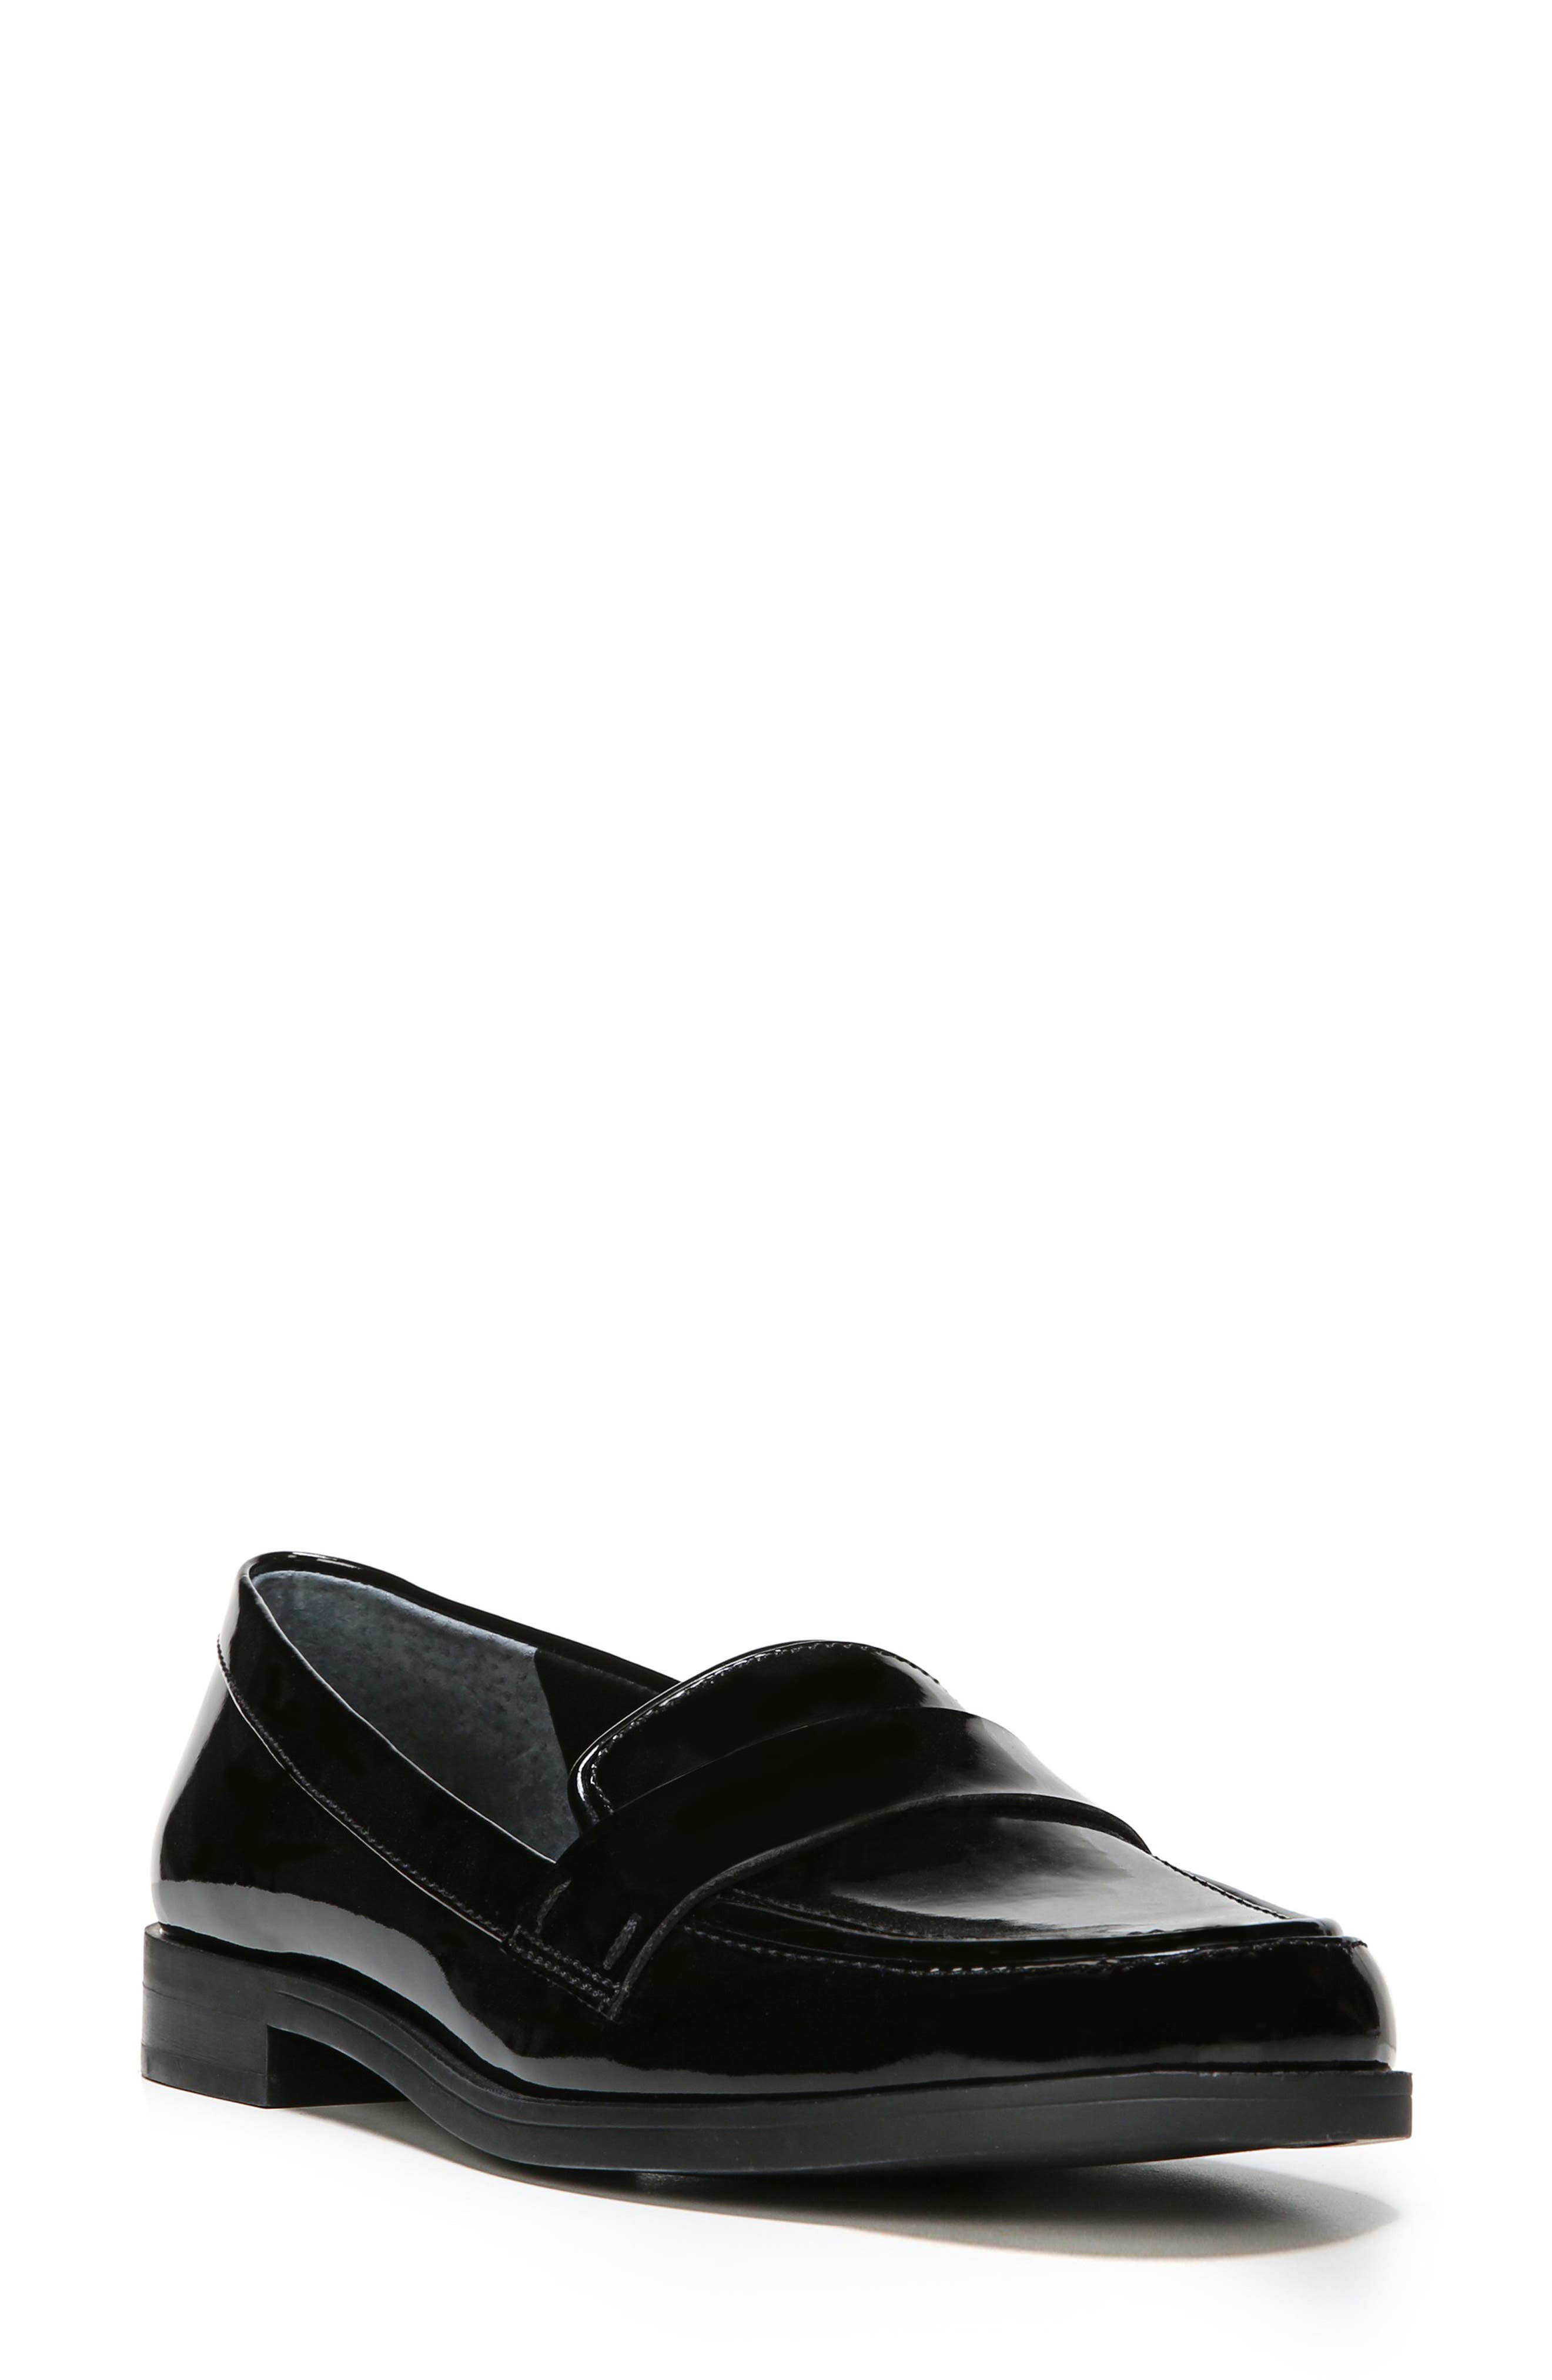 UPC 093638671520 product image for Women's Franco Sarto Valera Loafer, Size 6 M - Black | upcitemdb.com